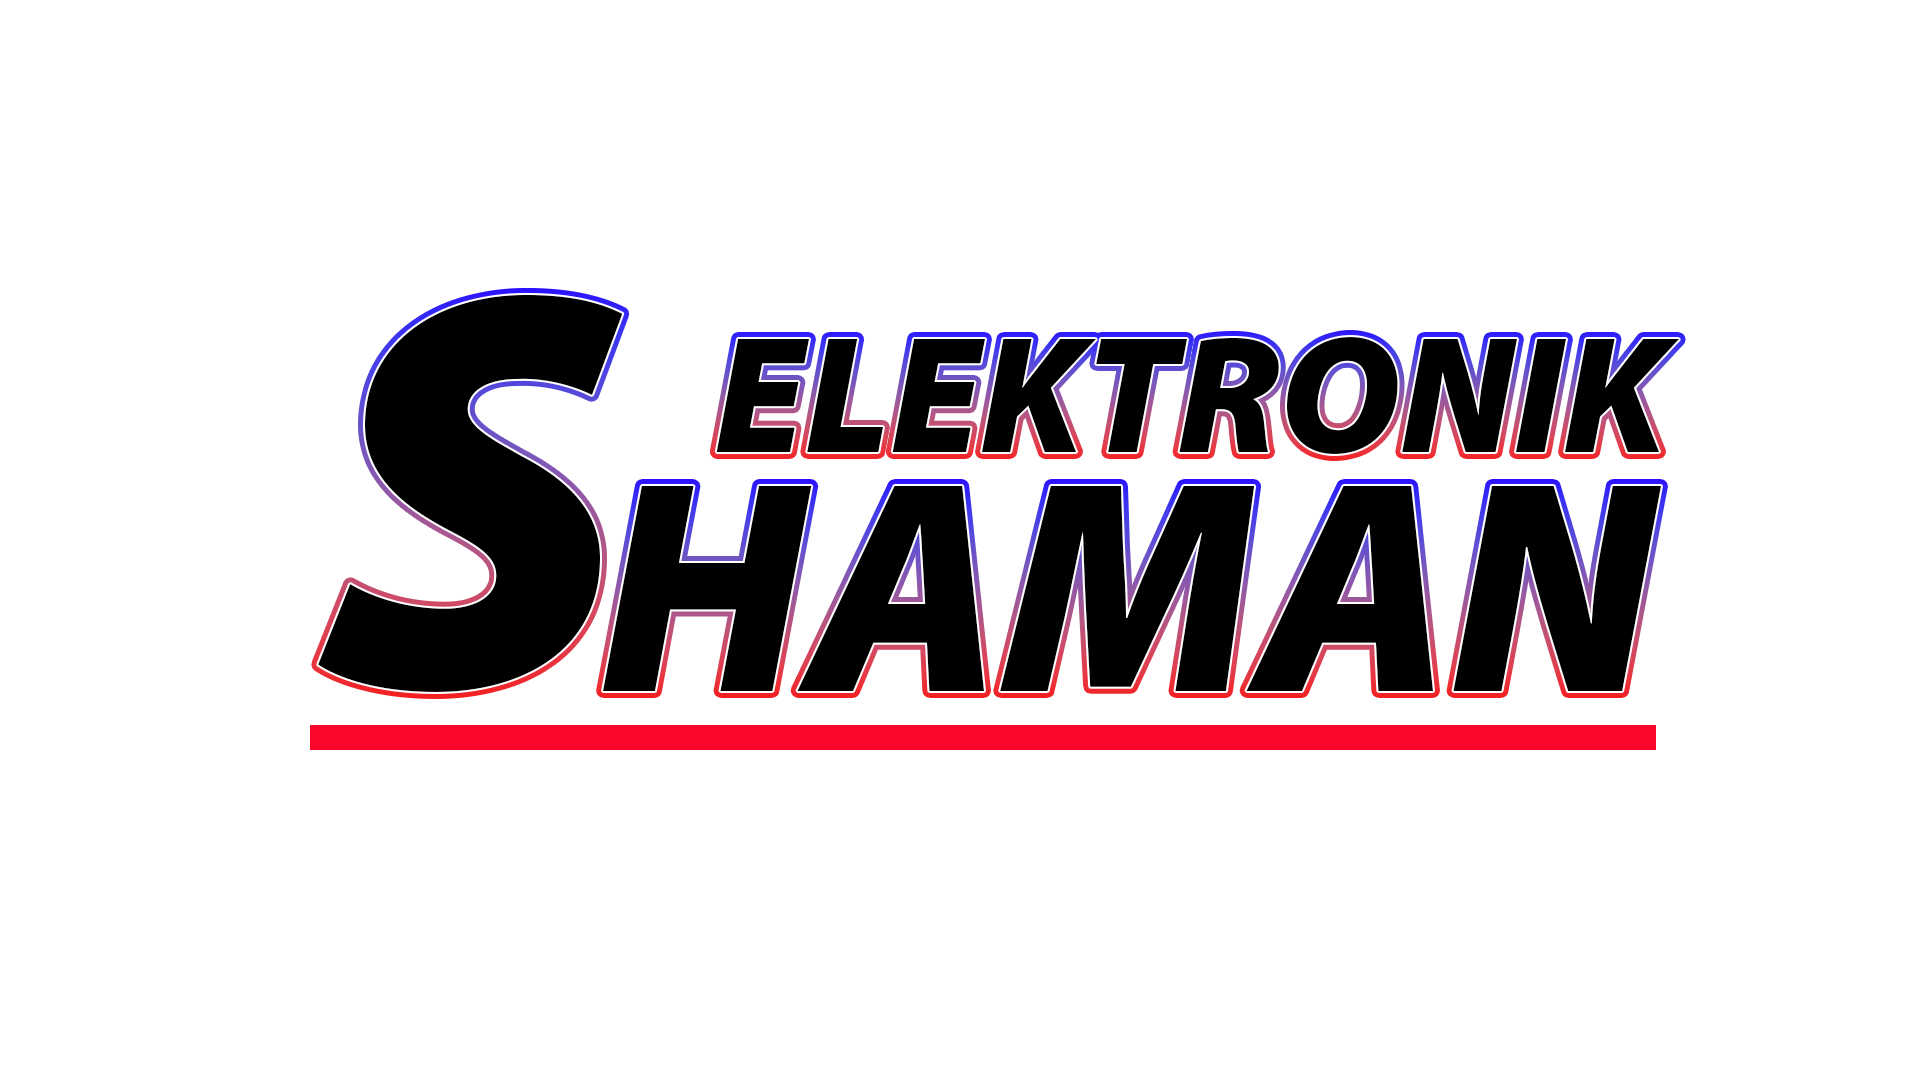 Elektronik Shaman